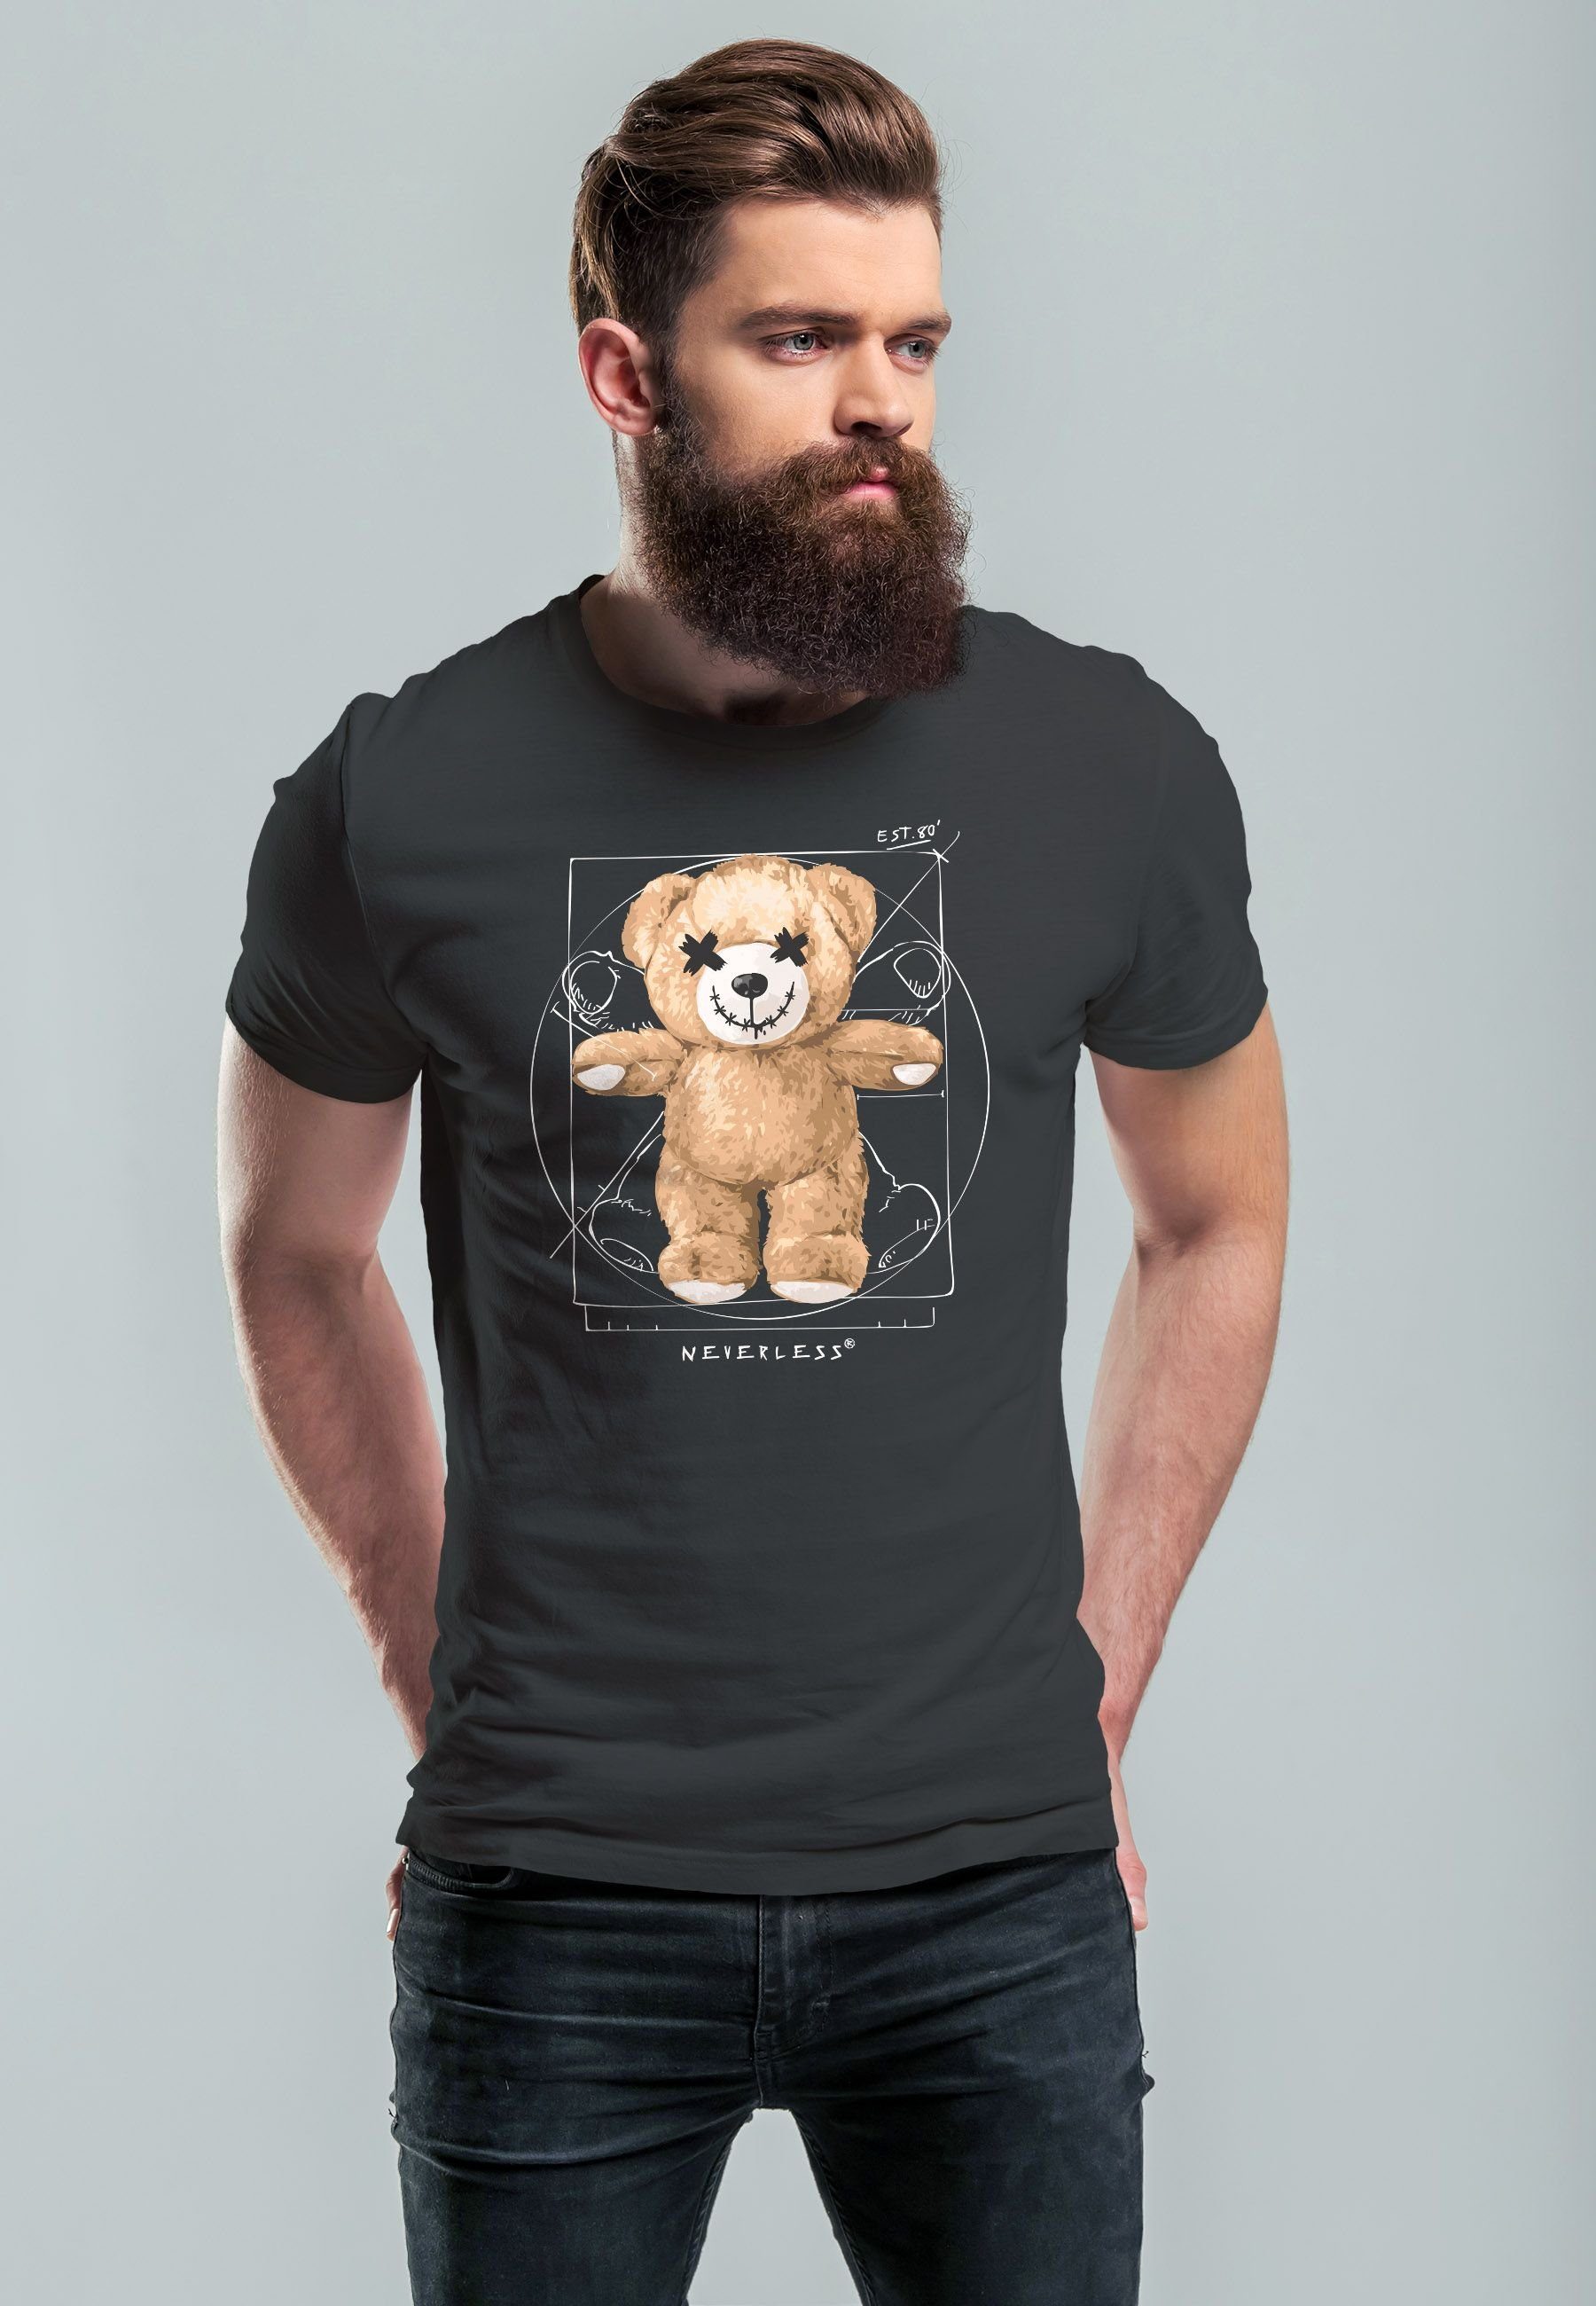 Fashion Streetstyl Print-Shirt Print Parodie T-Shirt Bär DaVinci Teddy Print Herren mit Meme dunkelgrau Neverless